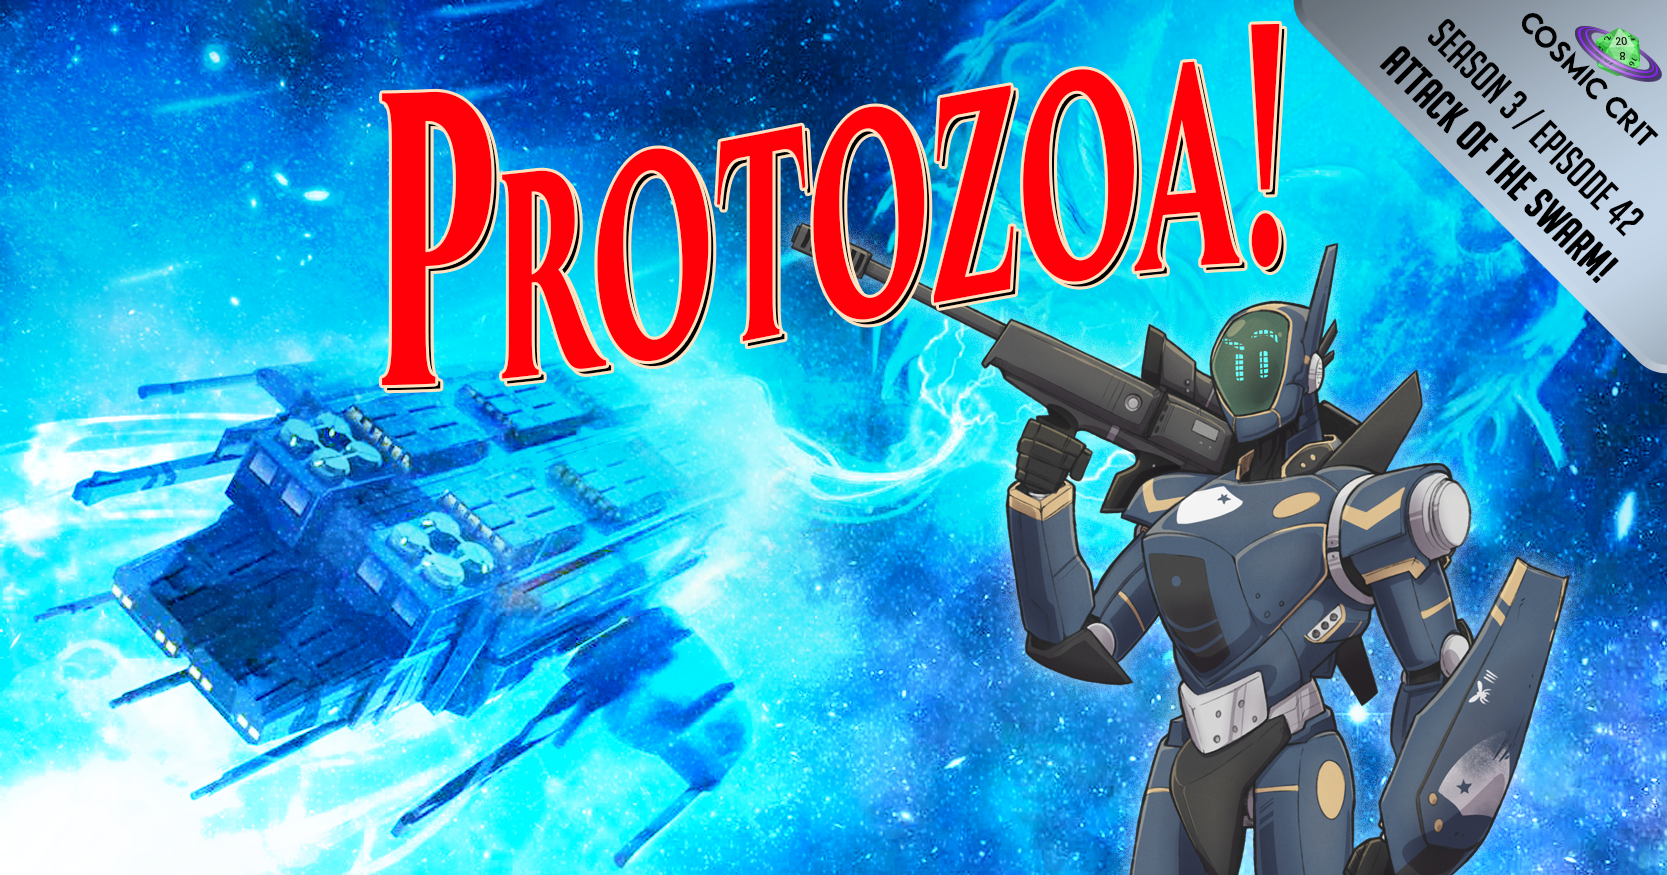 S3 | 158: Protozoa!